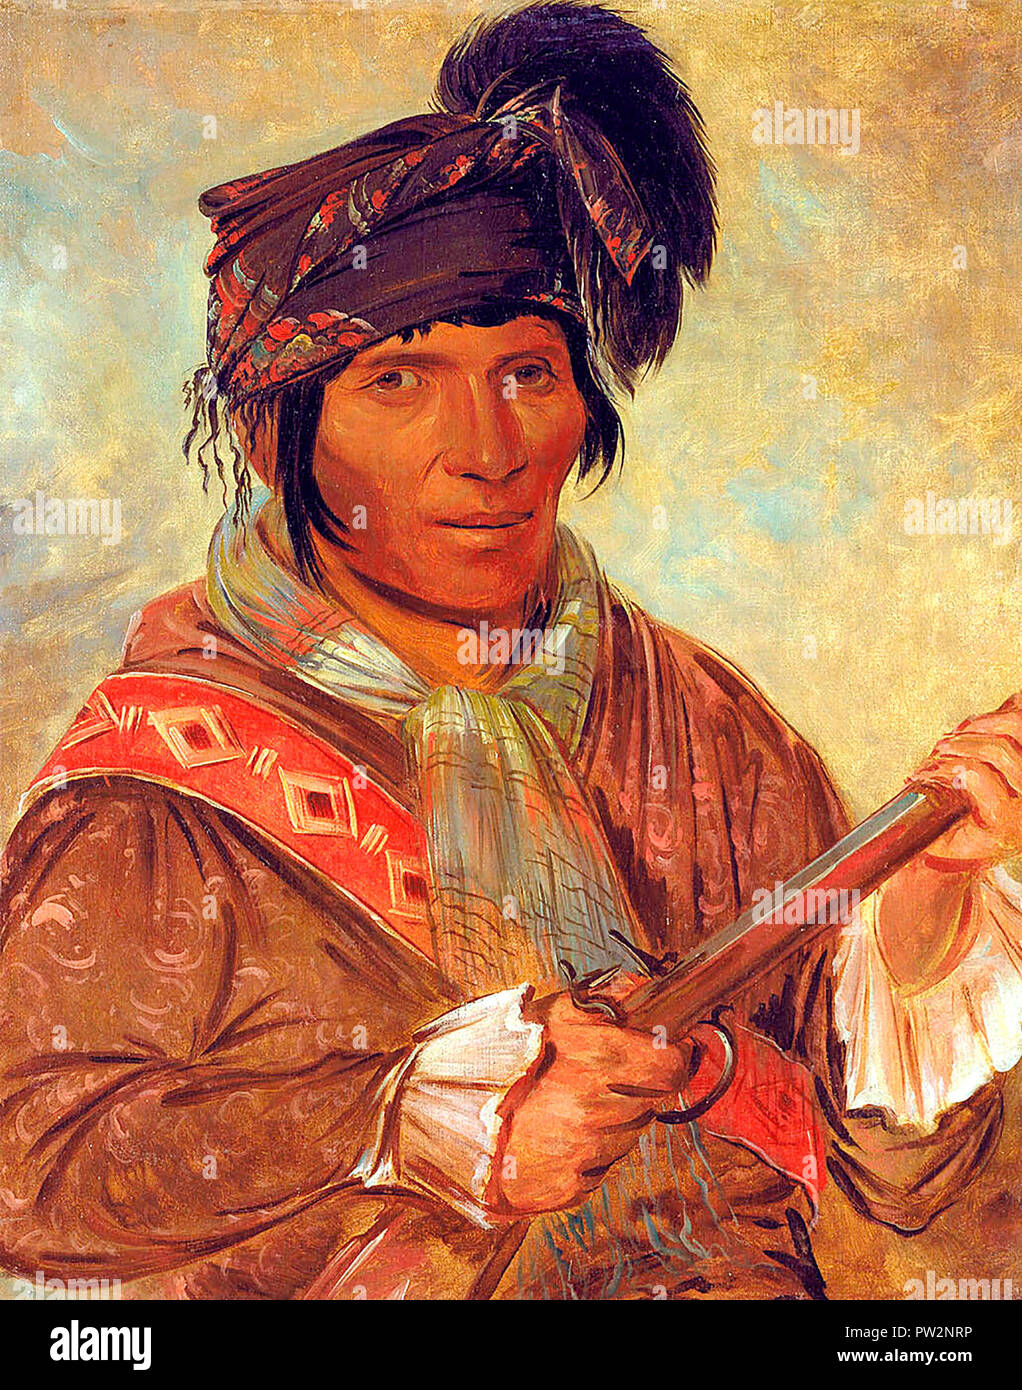 Co-ee-há-jo, ein Seminole Chief, George Catlin, 1837 Stockfoto